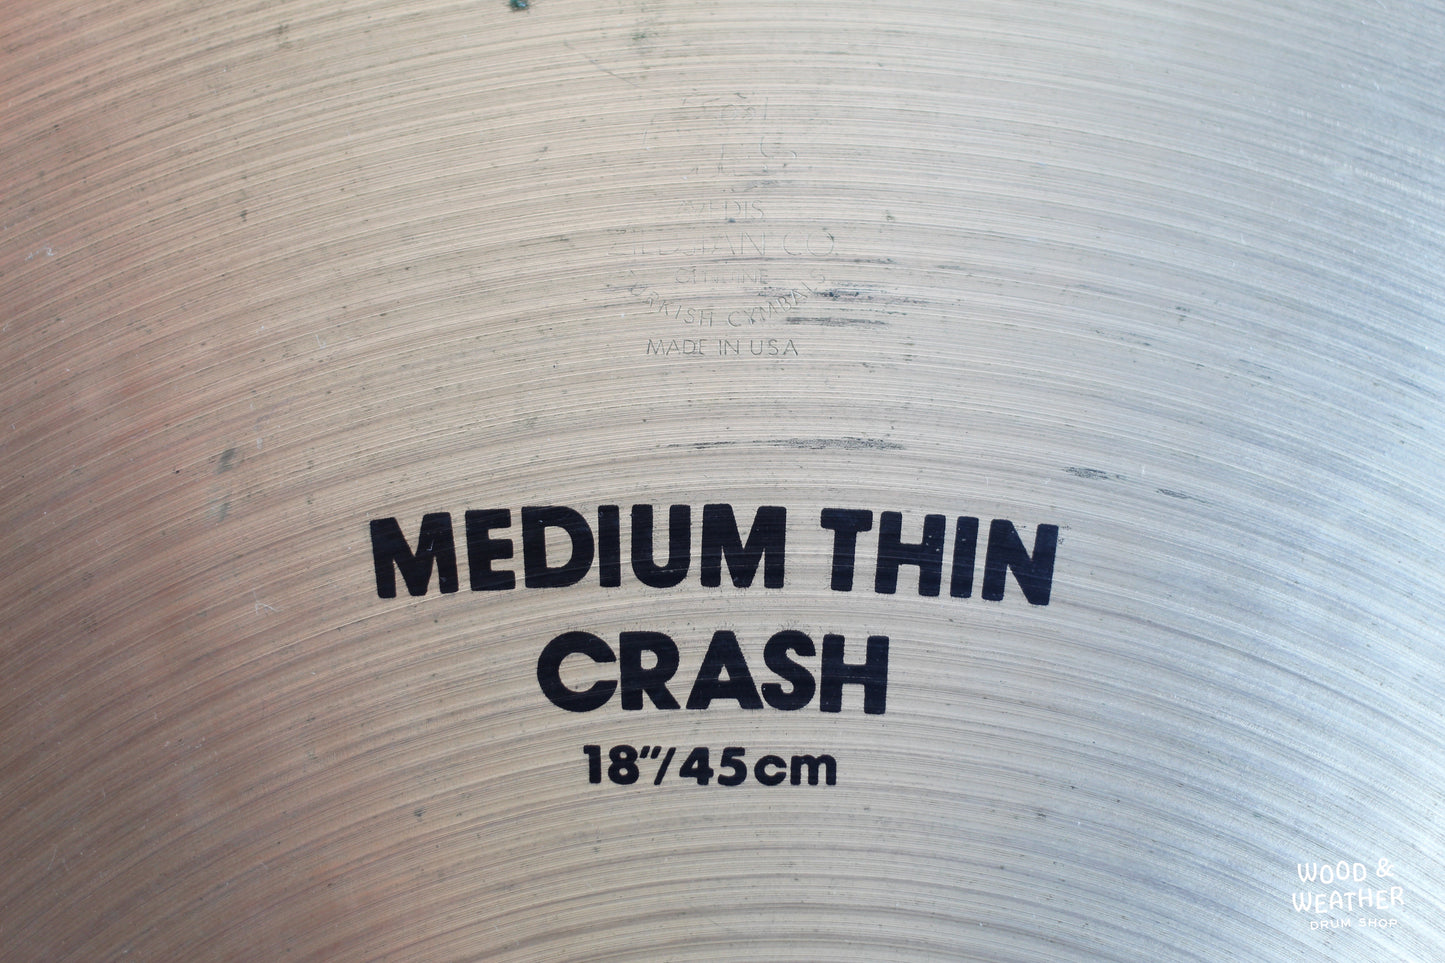 1980s A. Zildjian 18" "CO. Stamp" Medium Thin Crash Cymbal 1485g